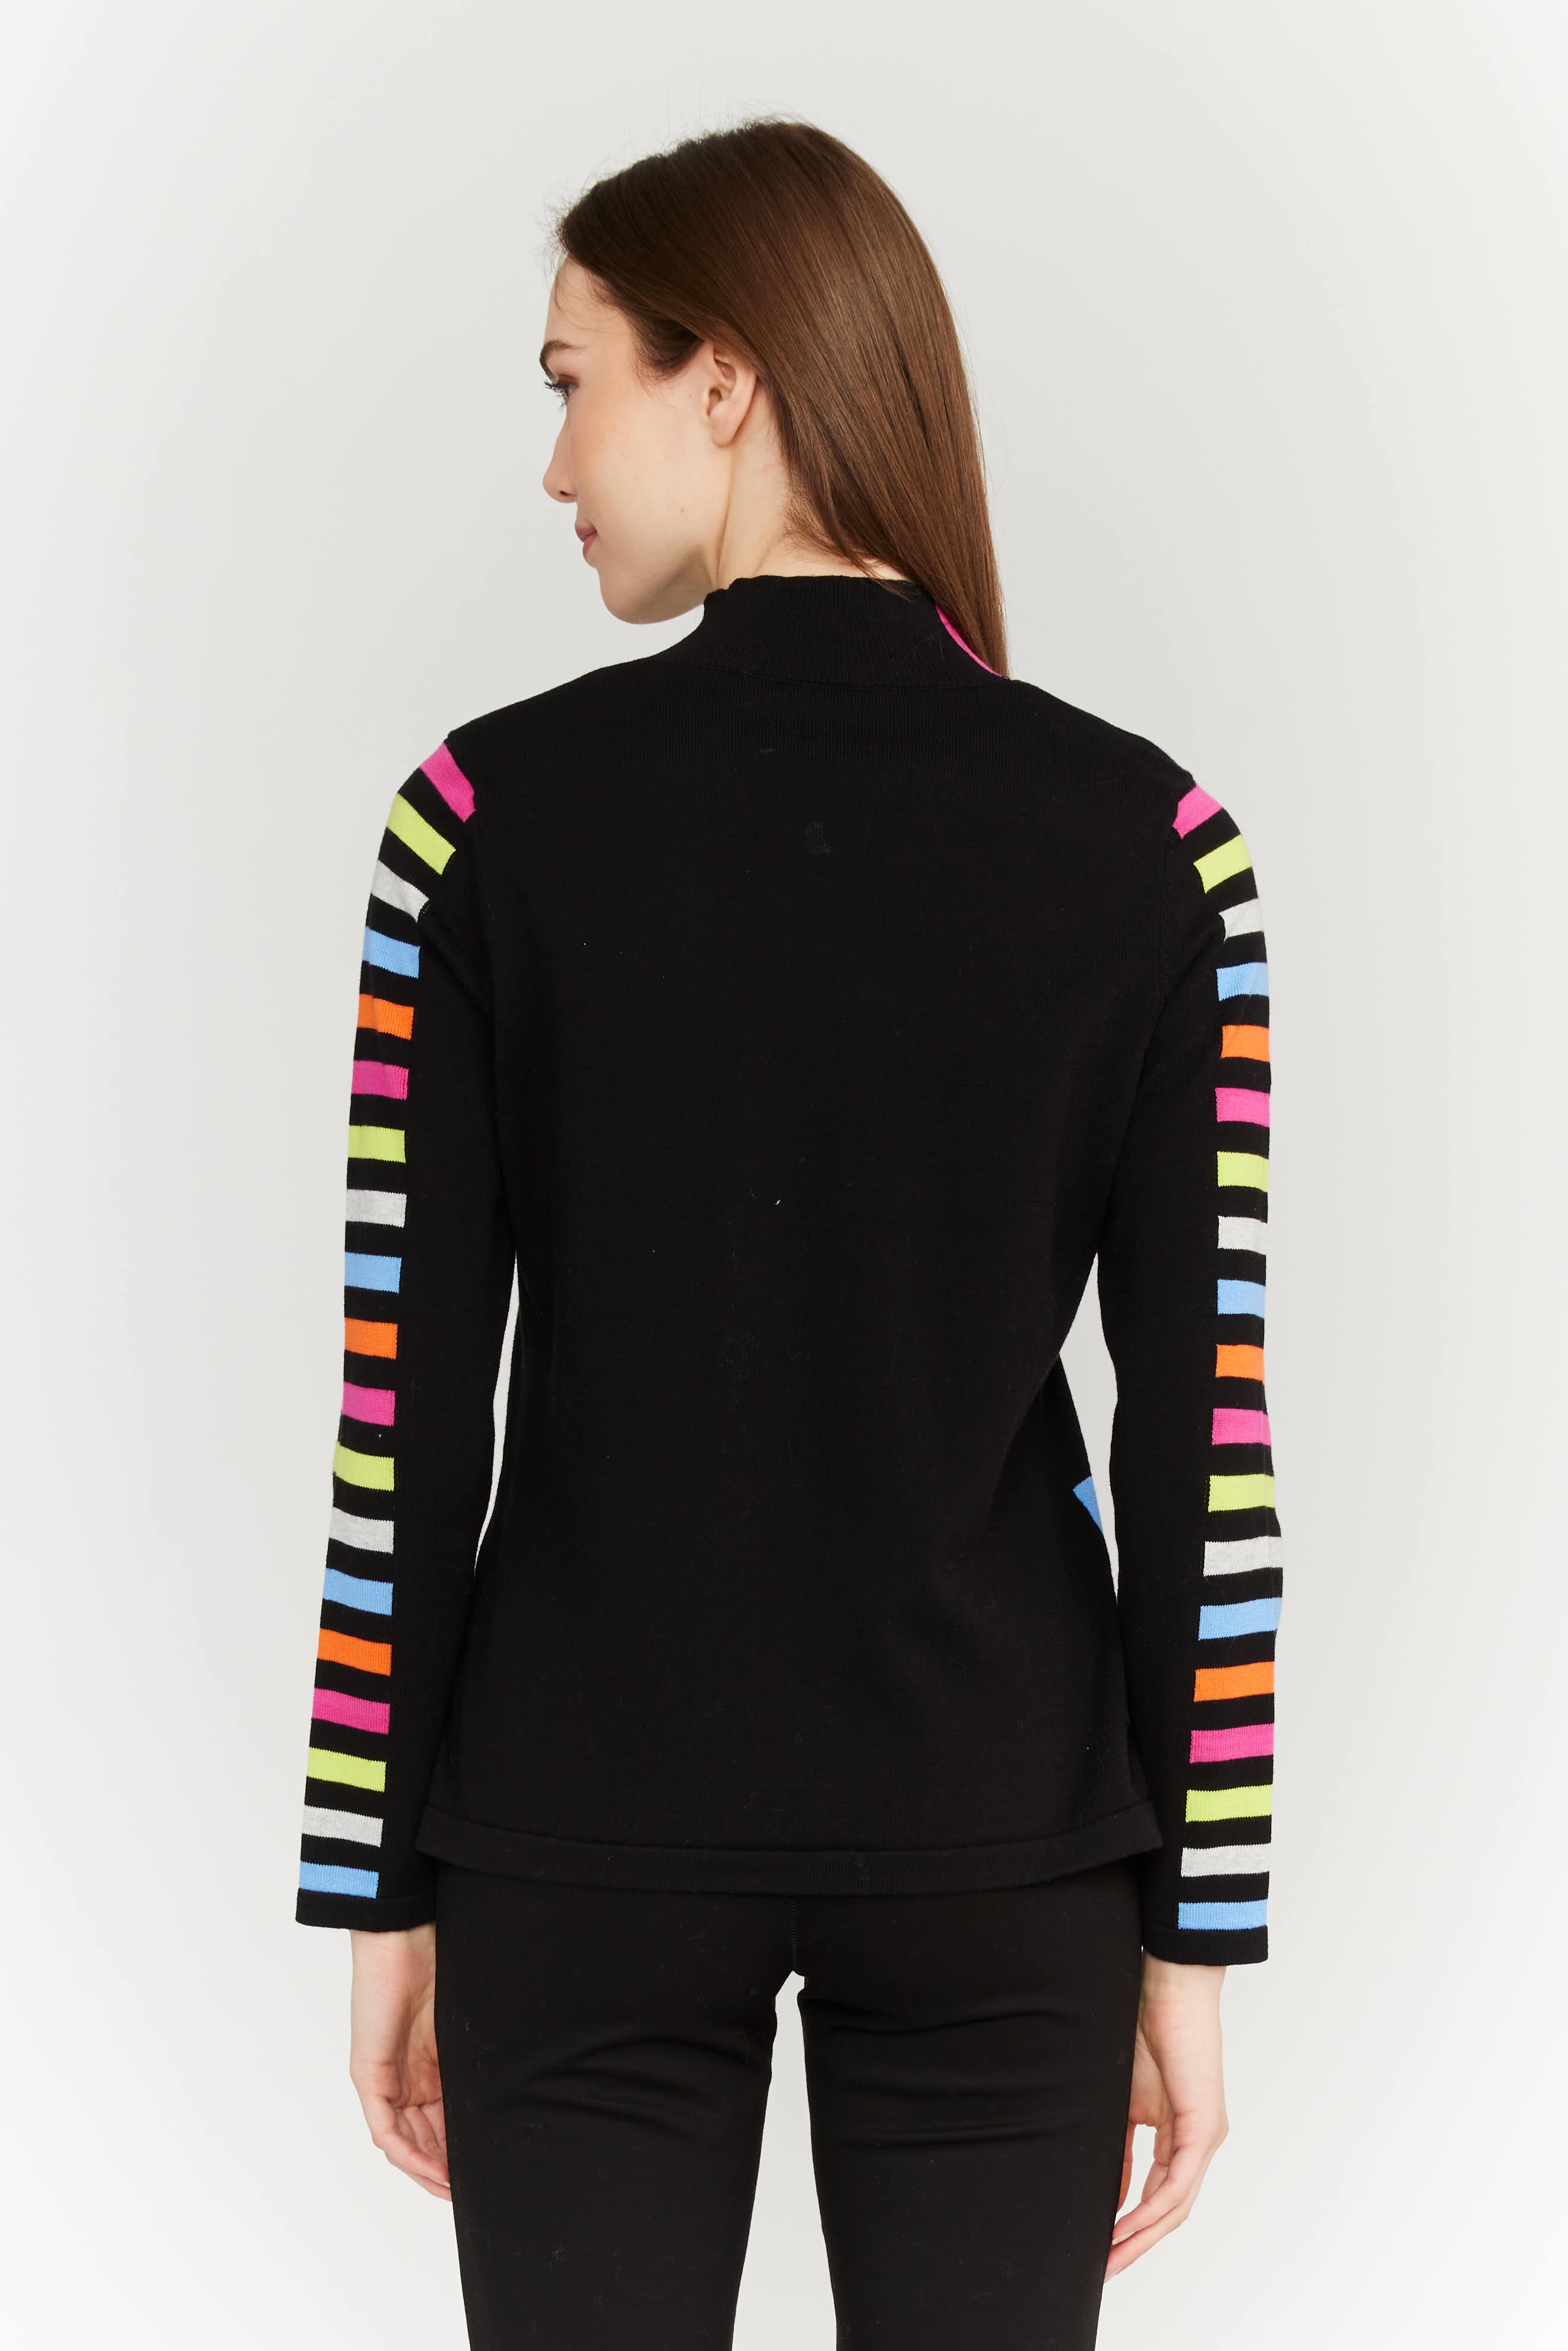 Striped Sleeve Sweater Style Ew31075